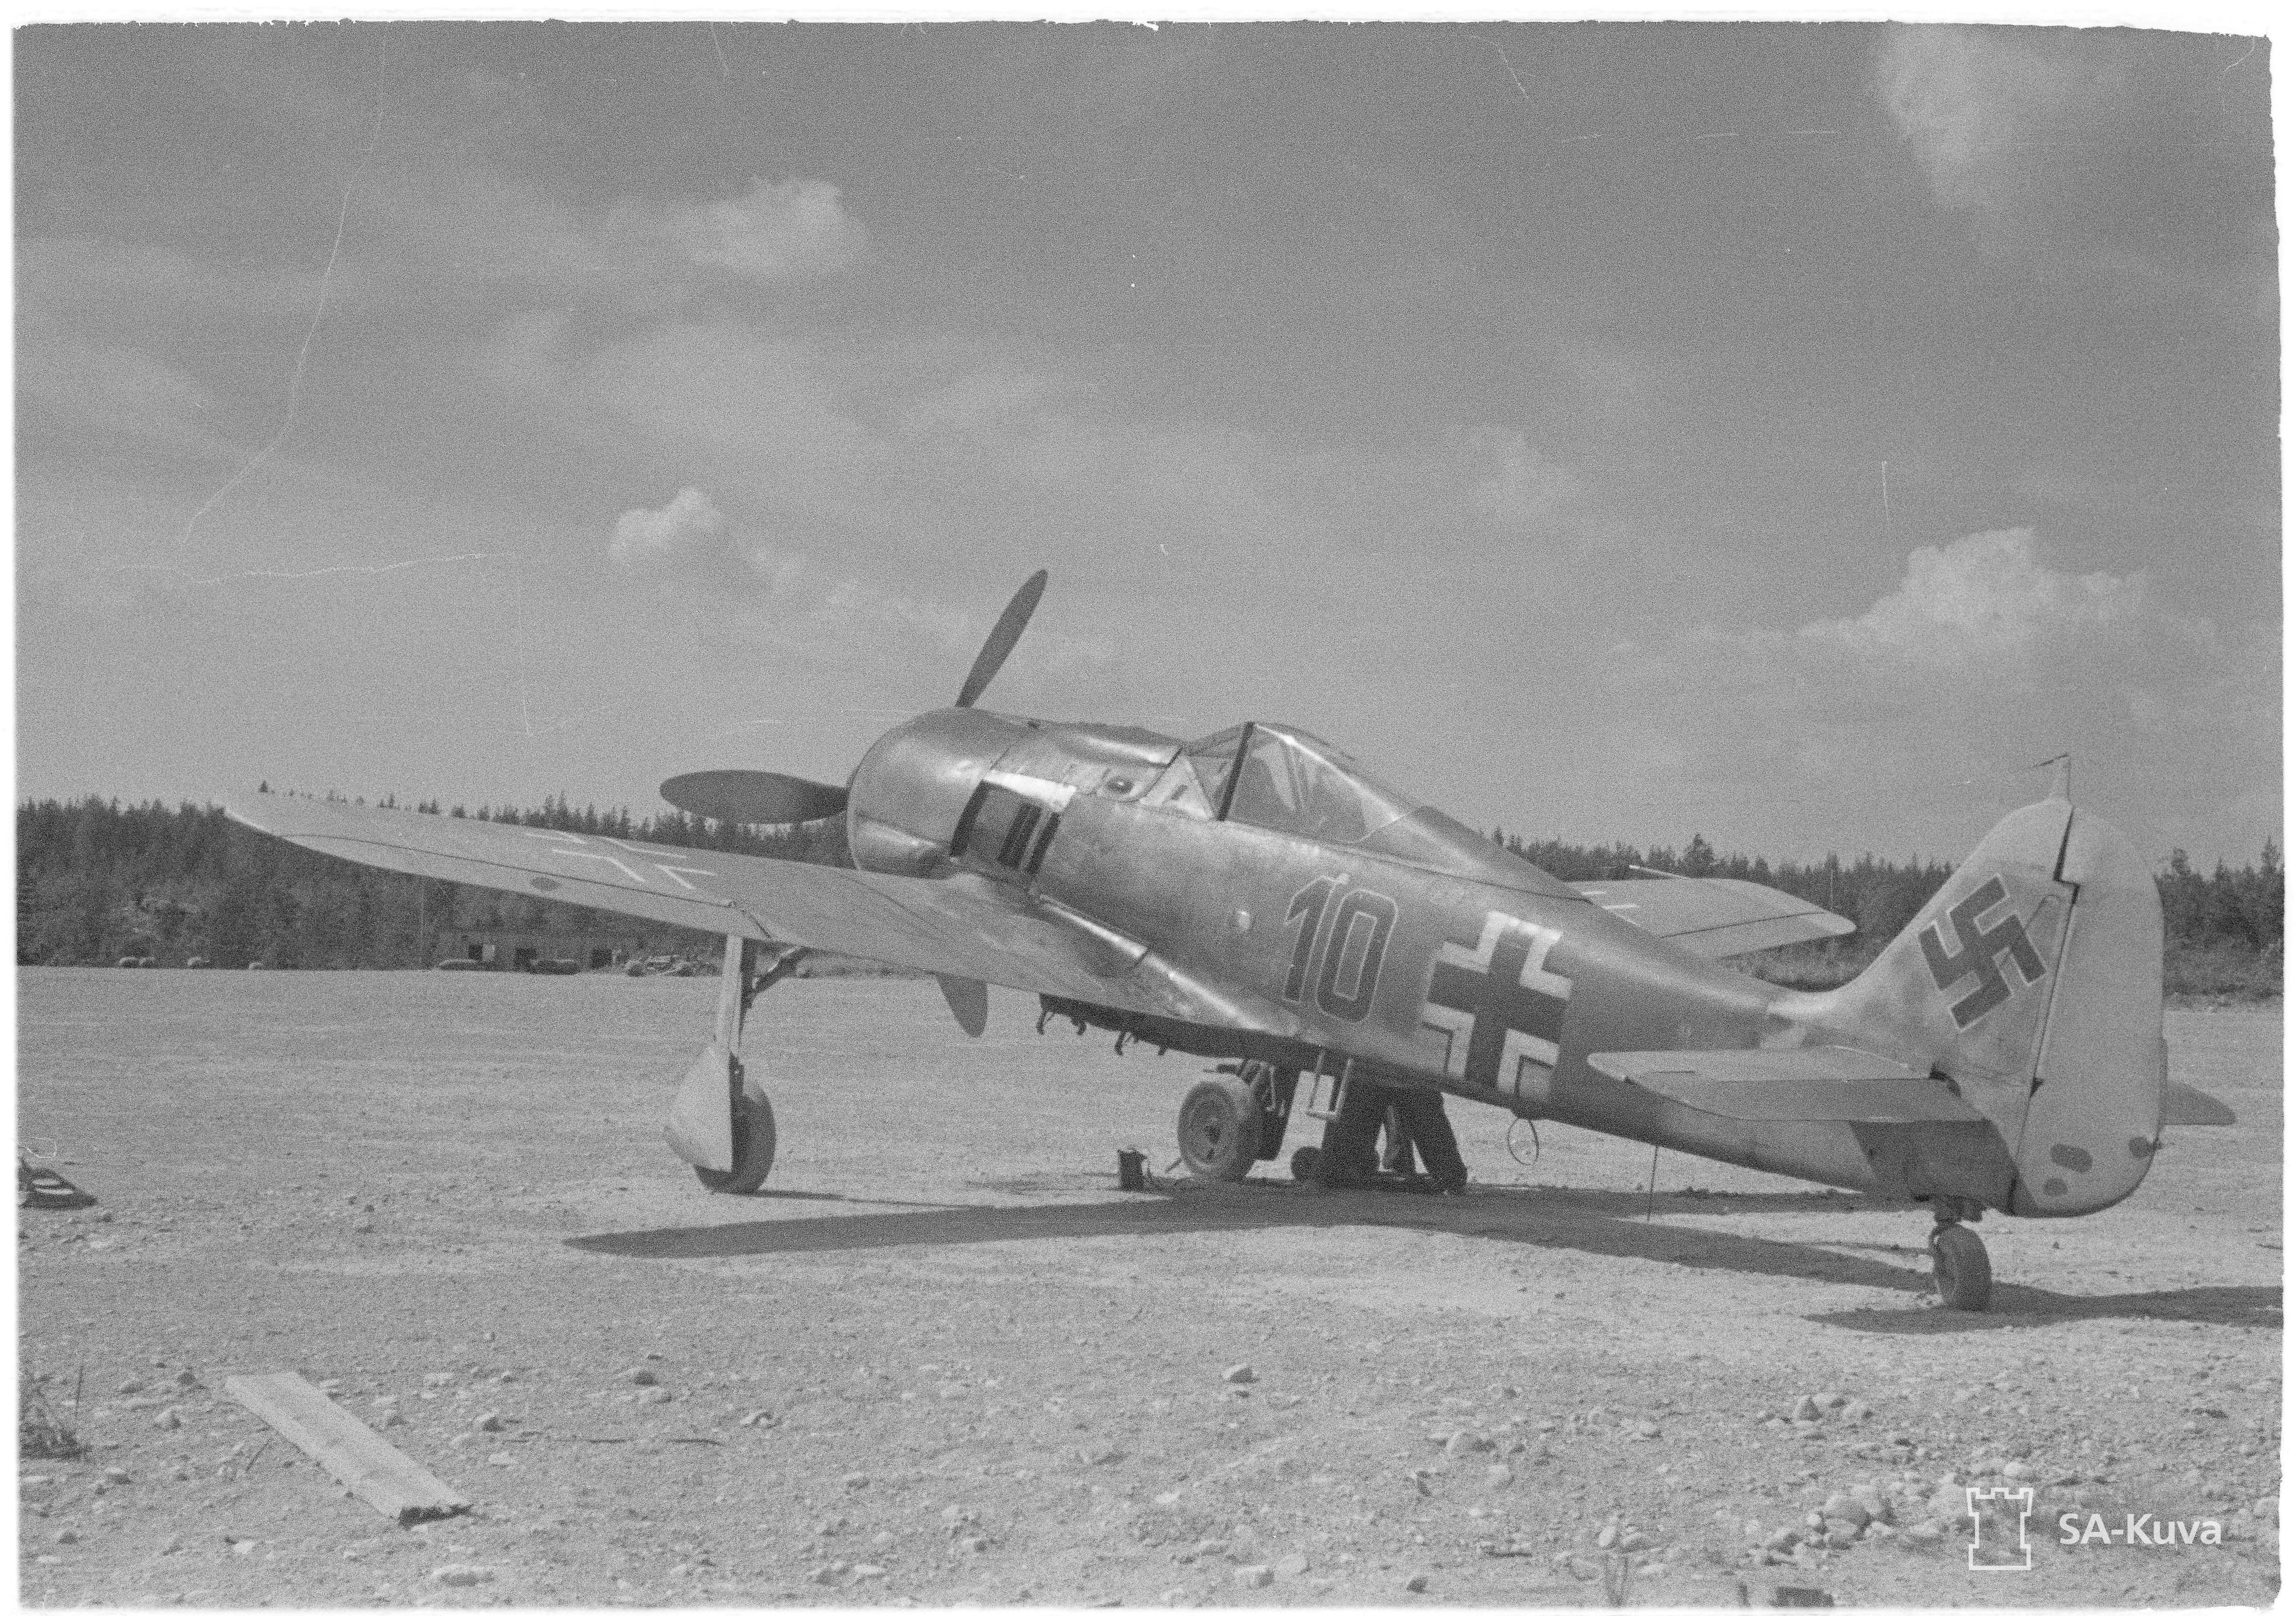 File:Focke-Wulf Fw 190 F-8 (SA-kuva 155391).jpg - Wikimedia Commons